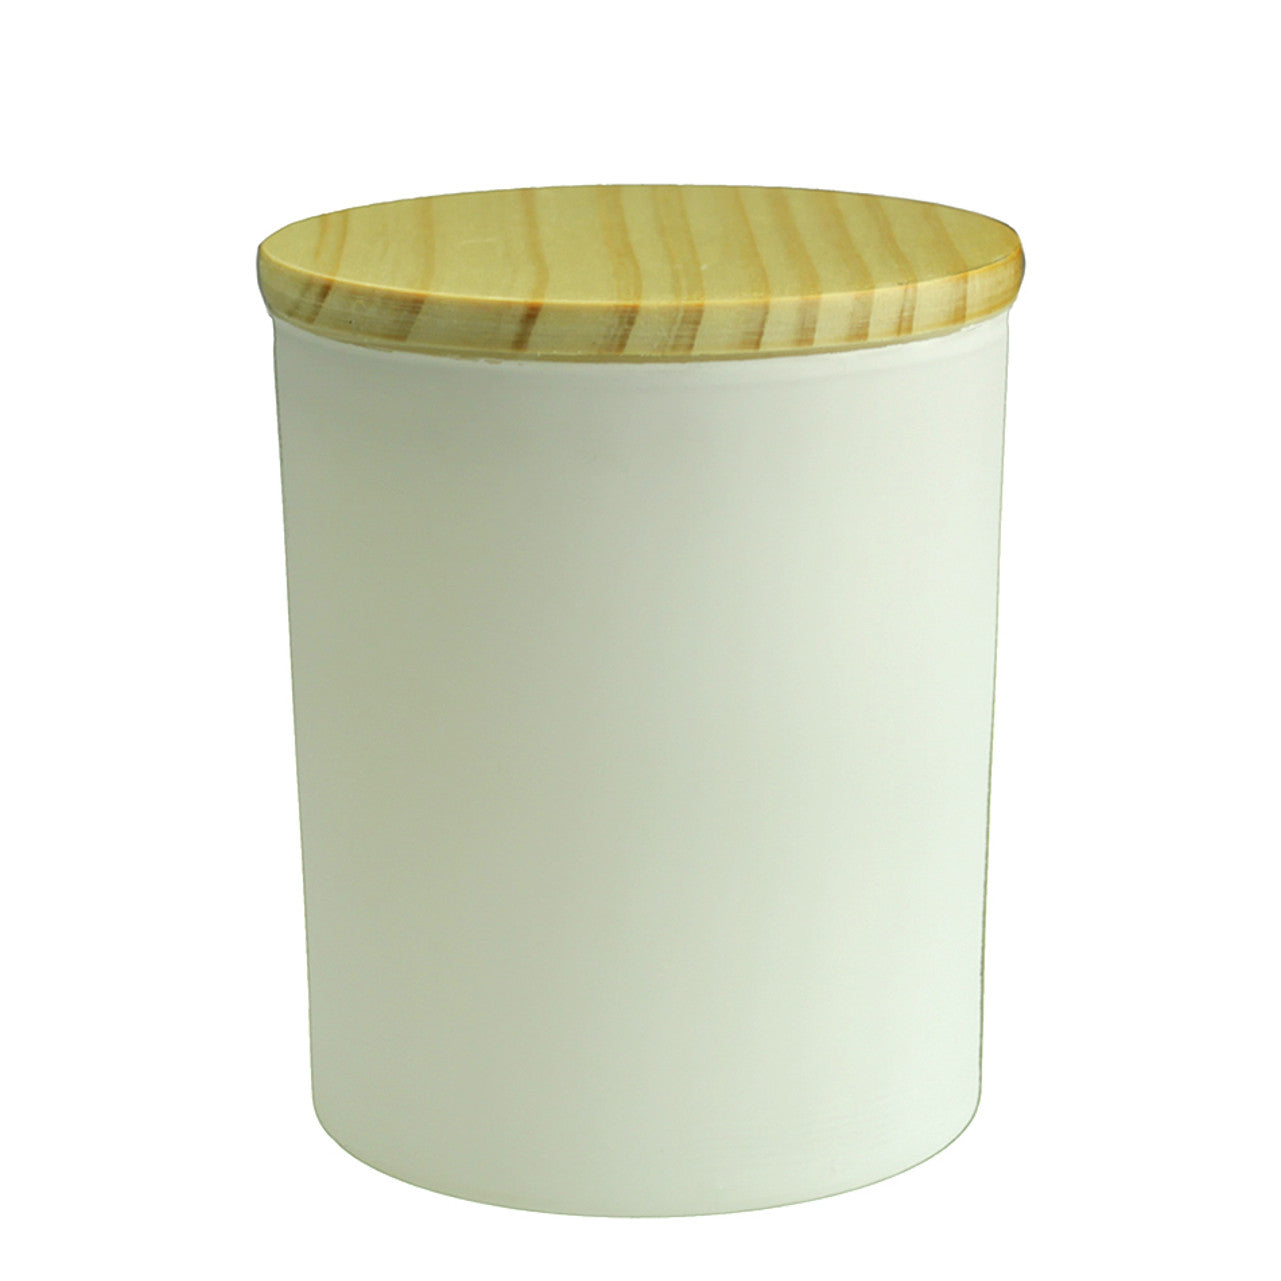 7 oz. matte white upgrade jar with natural wood lid